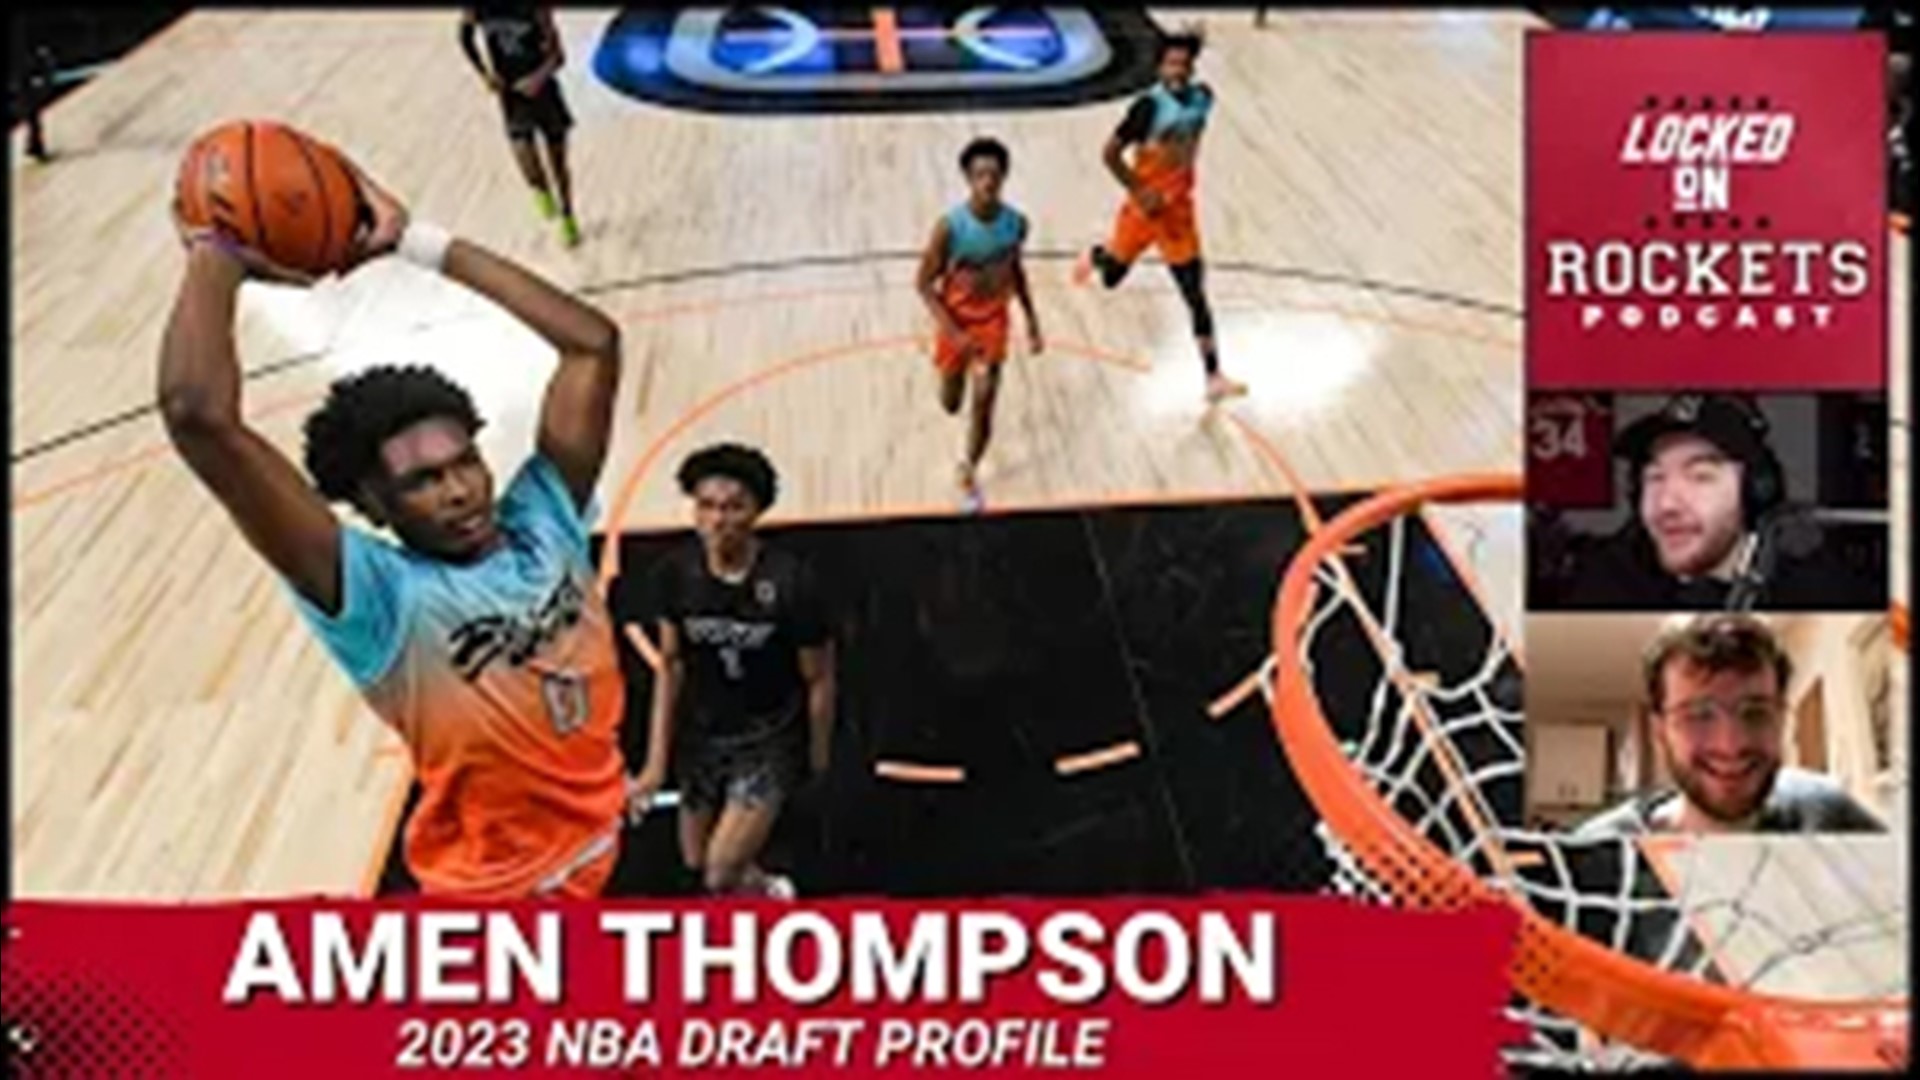 Host Jackson Gatlin (@JTGatlin) is joined by Nathan Fogg (@NathanFogg1) to break down and discuss Houston Rockets 2023 NBA Draft Prospect Amen Thompson